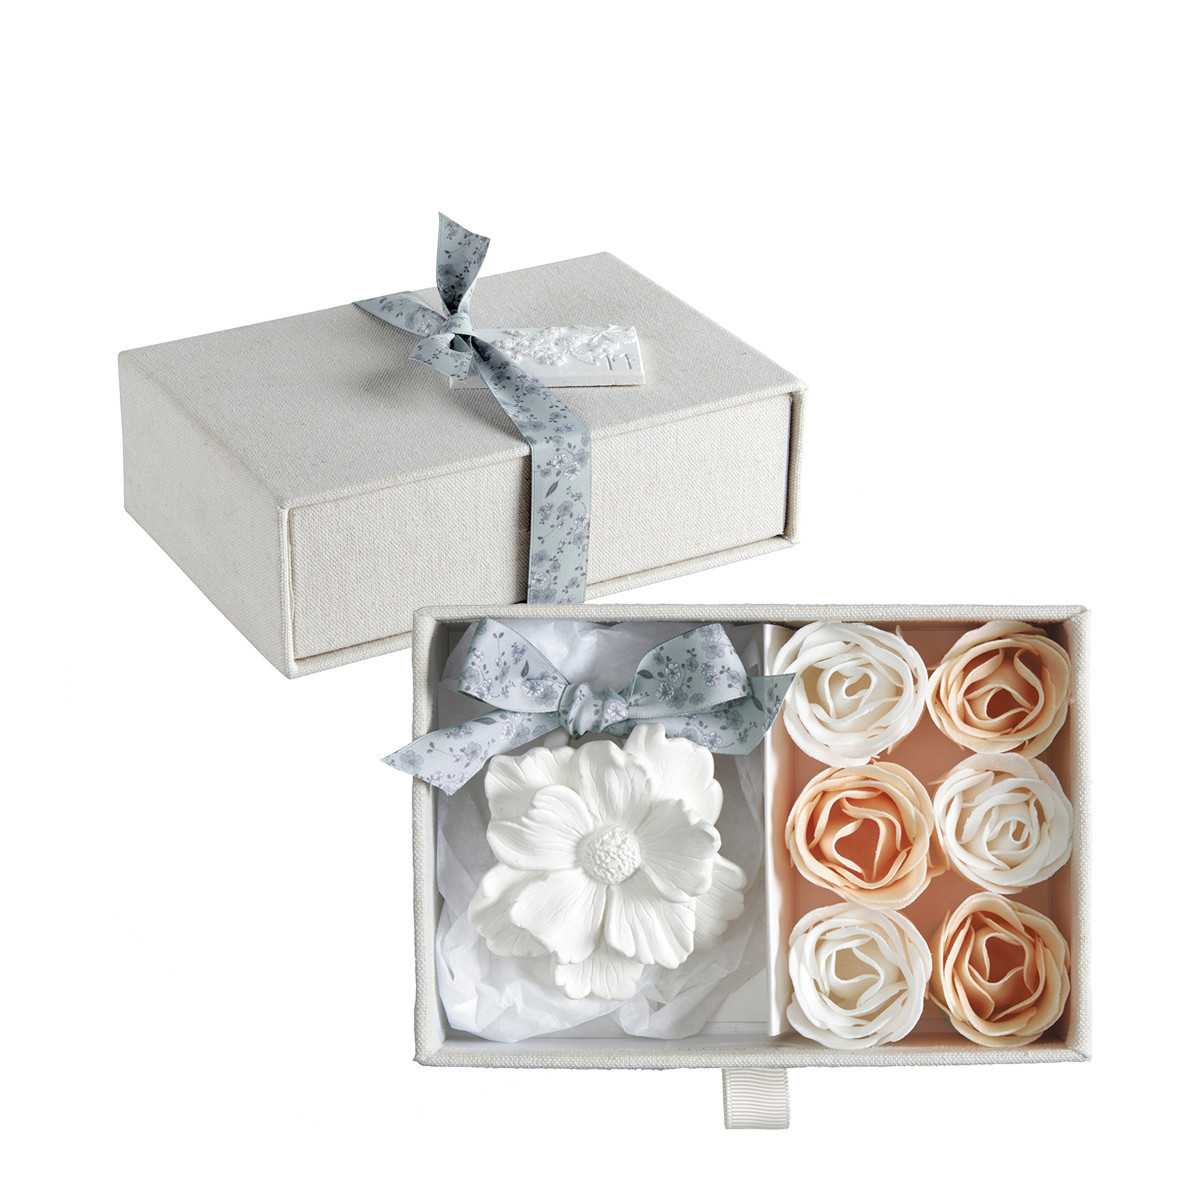 INTERIEUR- DECORATION|Eternal Roses Box - Cotton FlowerMATHILDE MWellness boxes